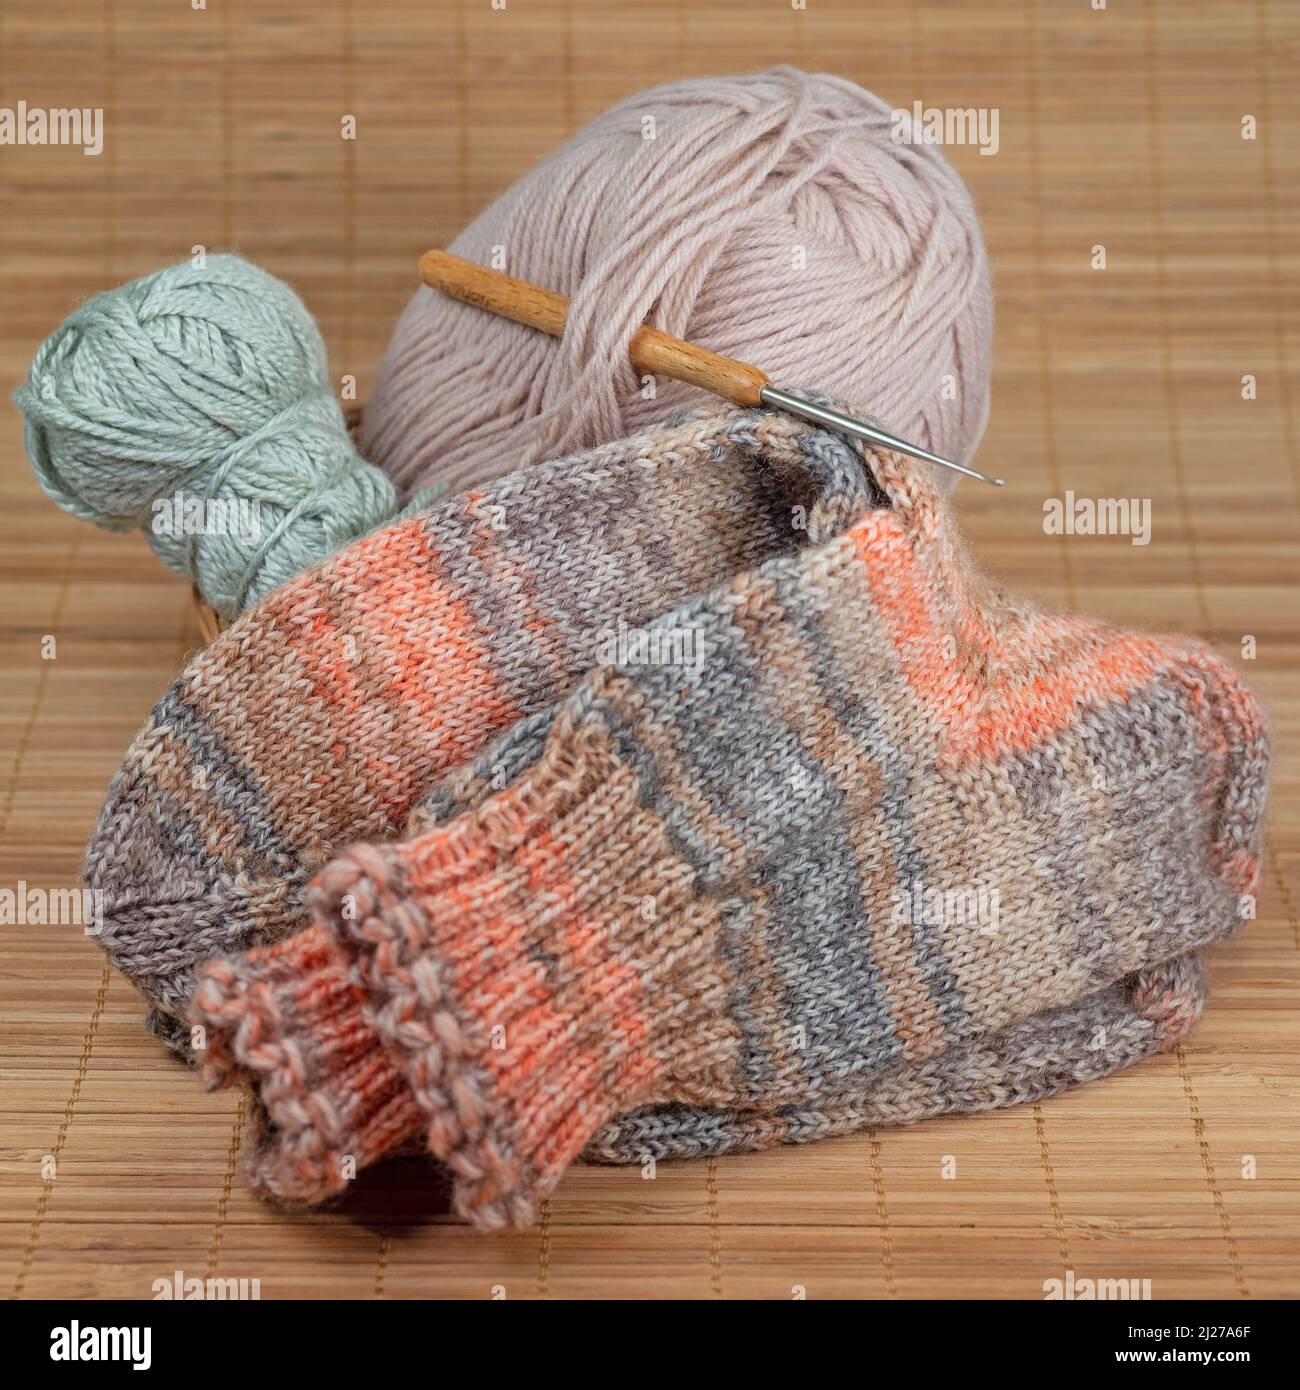 Crochet yarn and crochet hook in a closeup Stock Photo